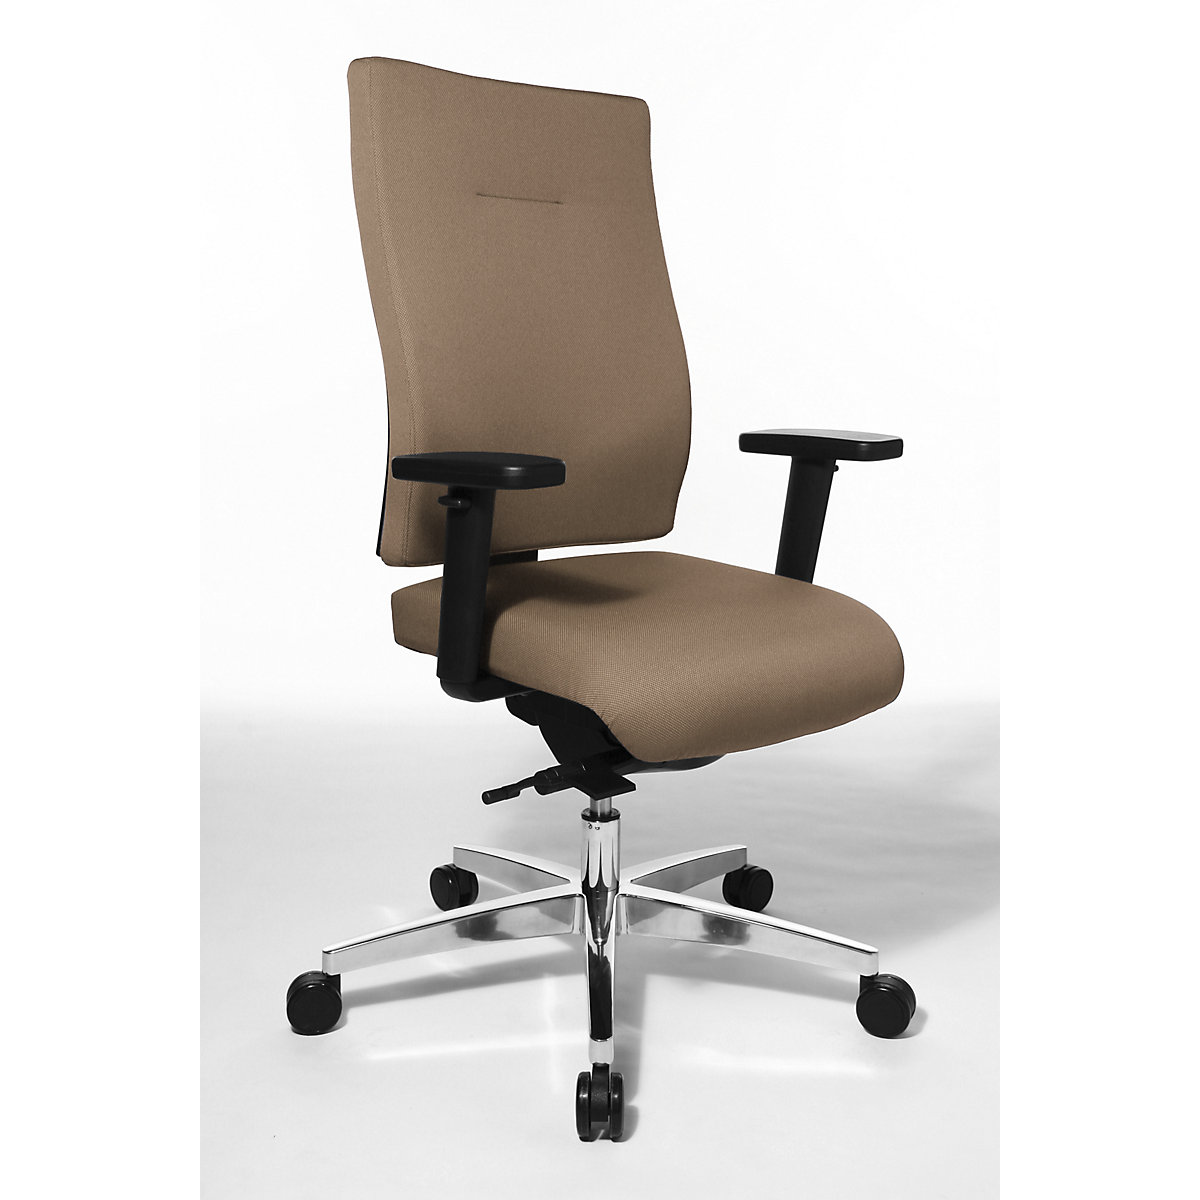 PROFI STAR 15 office swivel chair – Topstar, ergonomic back rest, light brown-9